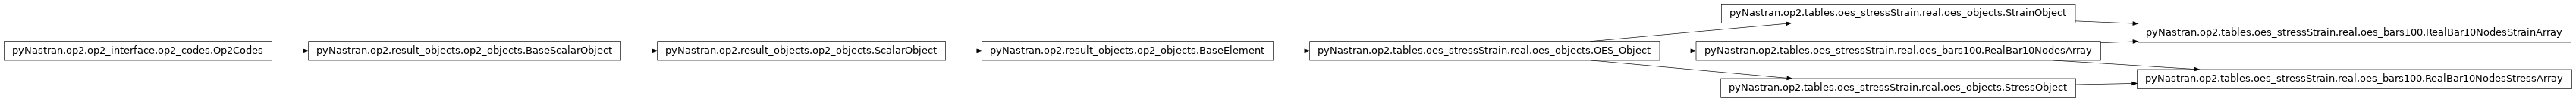 Inheritance diagram of pyNastran.op2.tables.oes_stressStrain.real.oes_bars100